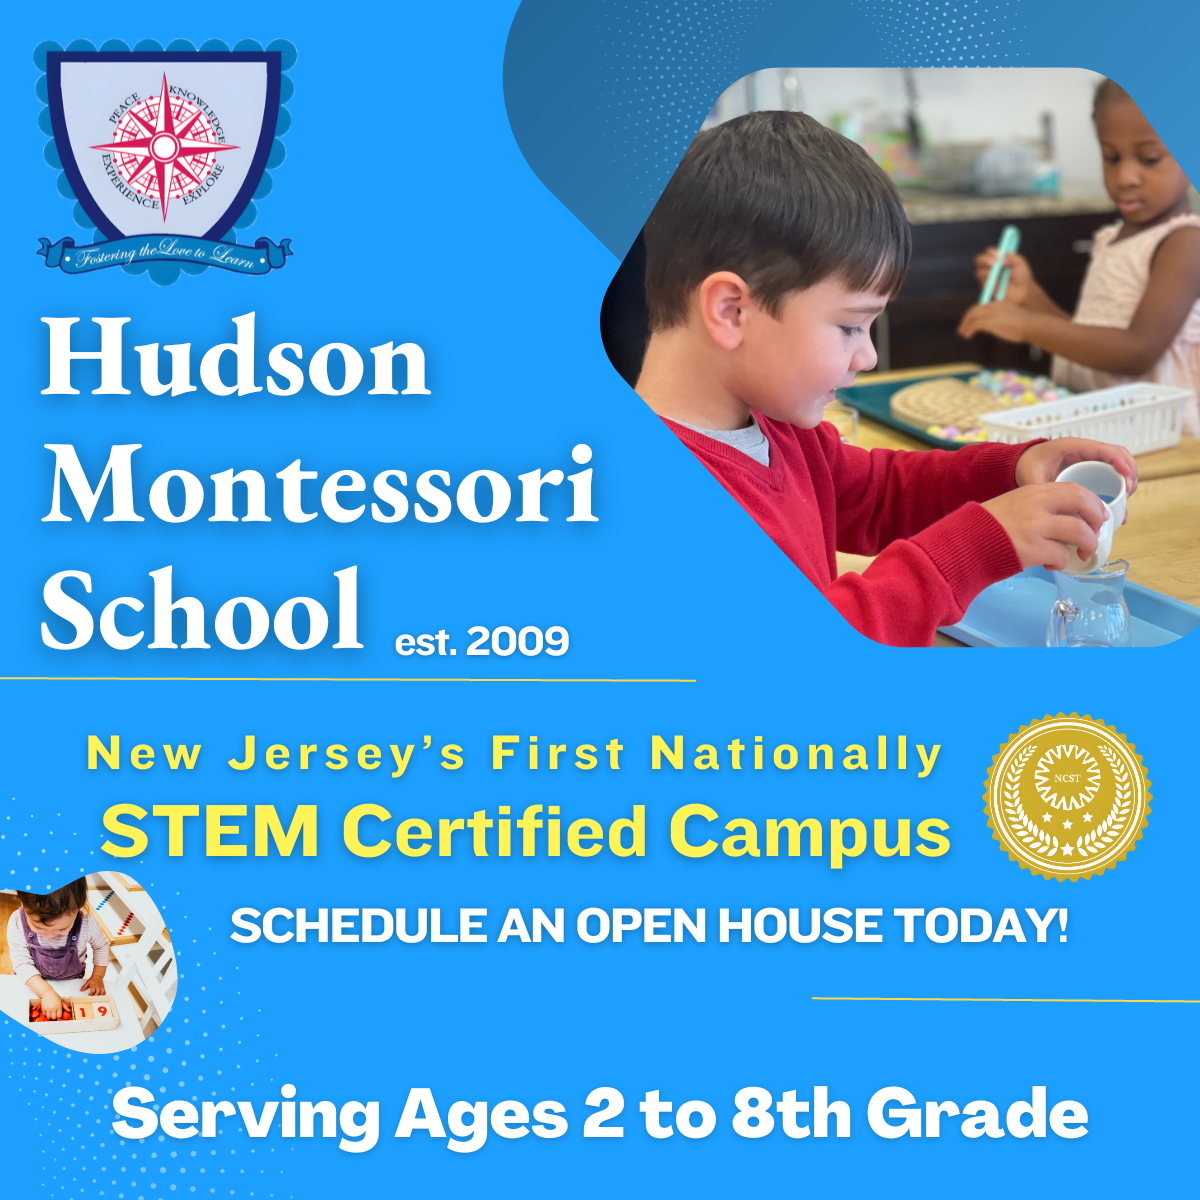   Hudson  Montessori  School, 10 Regent St, Jersey City, NJ 07302